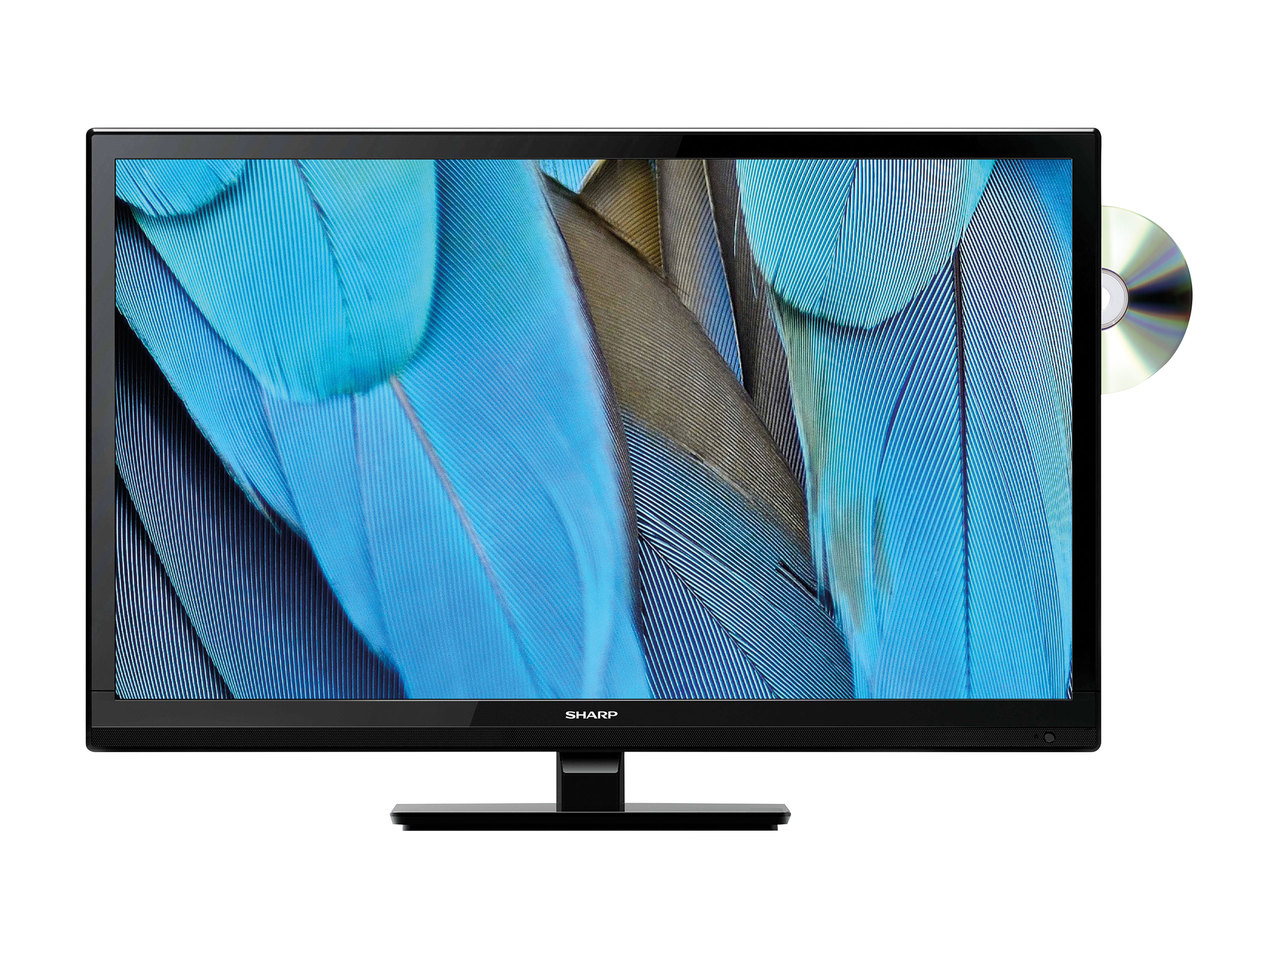 Sharp 24" HD-Ready LED TV1